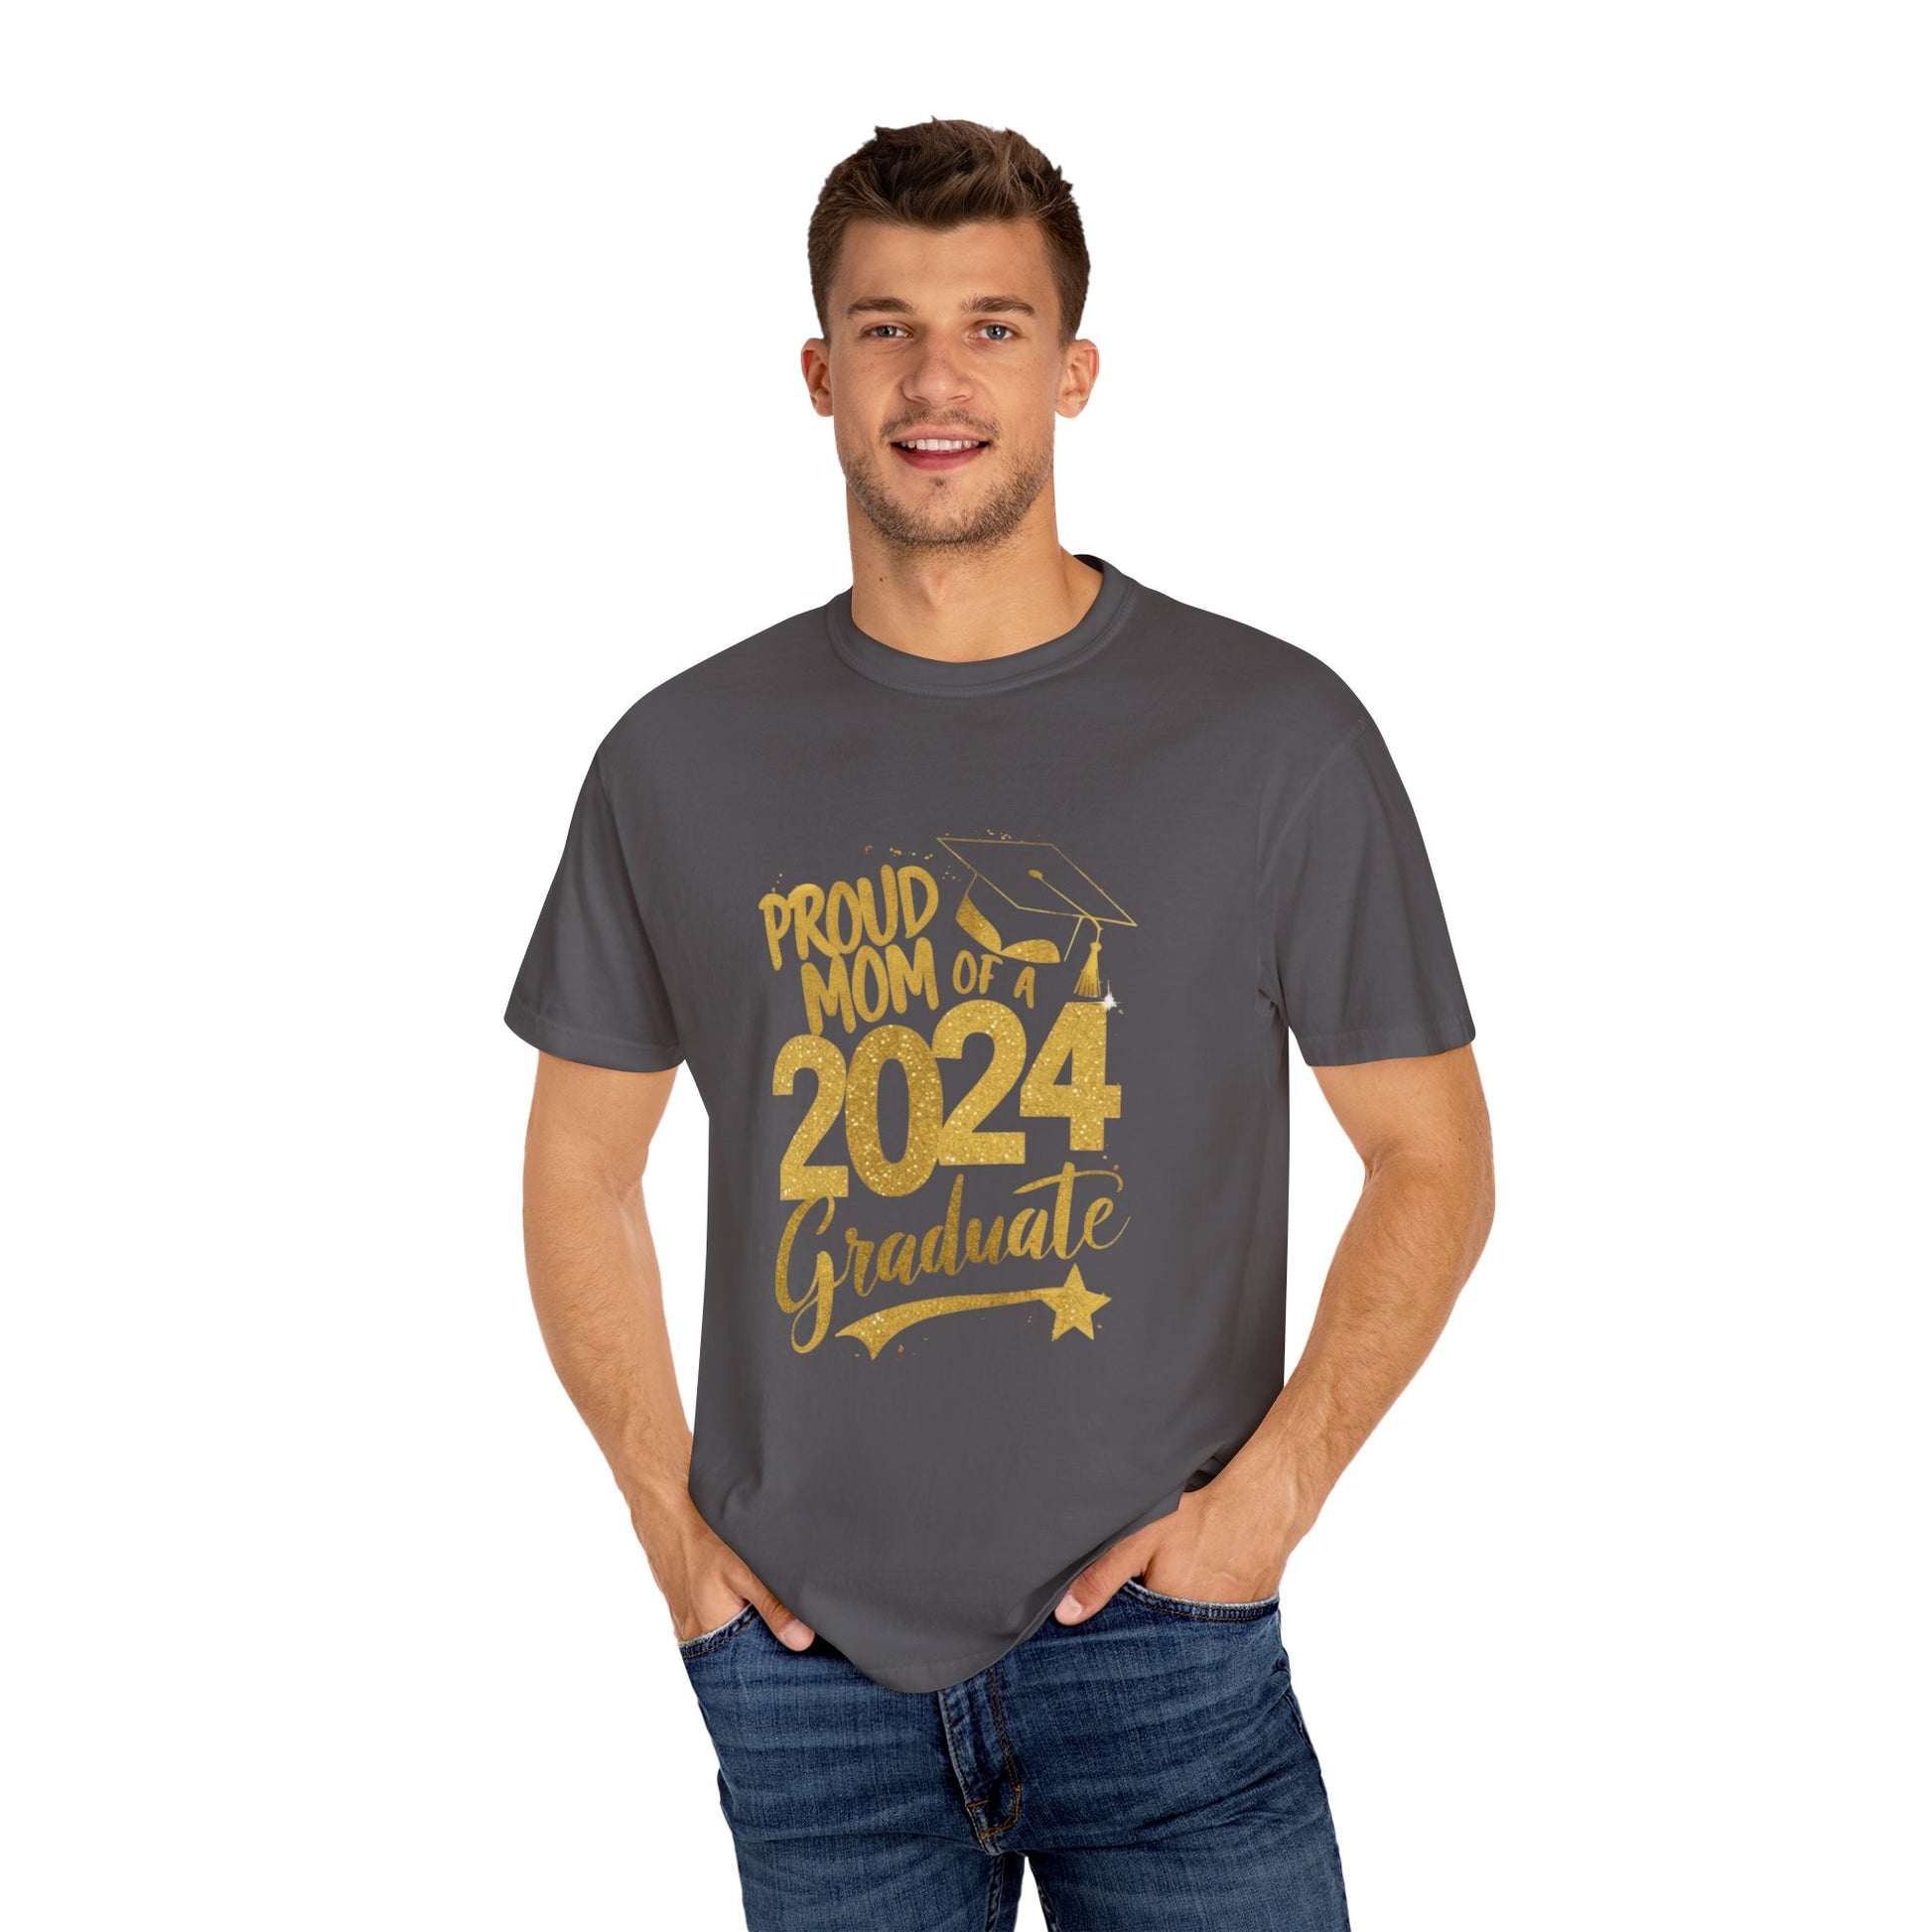 Proud of Mom 2024 Graduate Unisex Garment-dyed T-shirt Cotton Funny Humorous Graphic Soft Premium Unisex Men Women Graphite T-shirt Birthday Gift-39